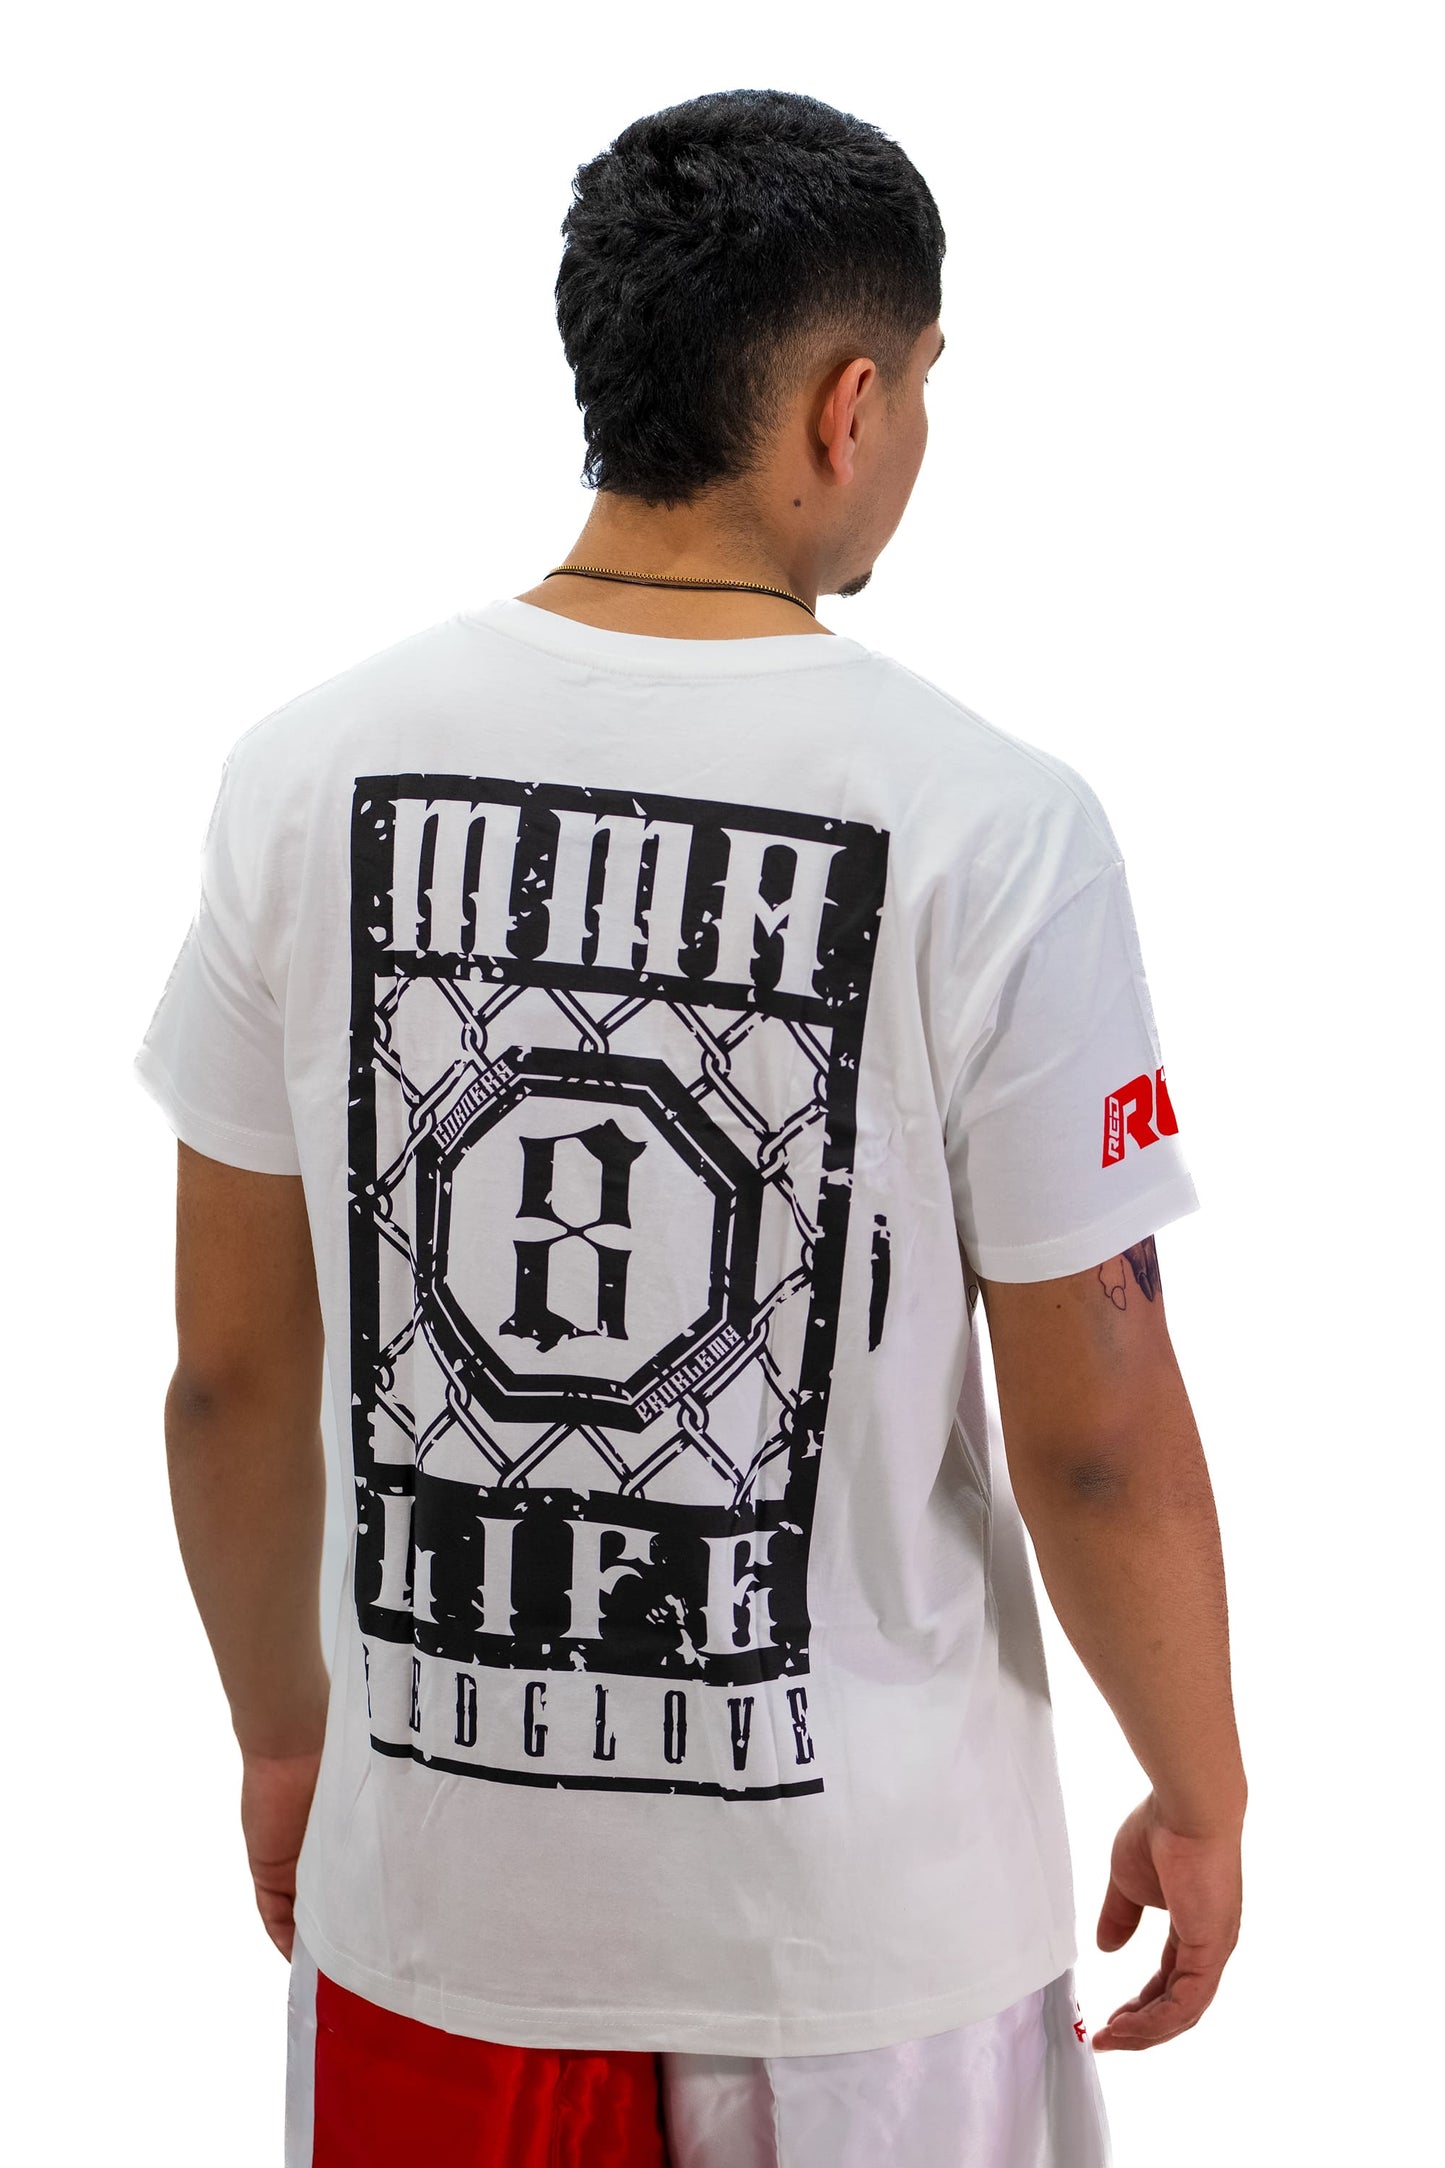 Camiseta Redglove MMA - Redglove